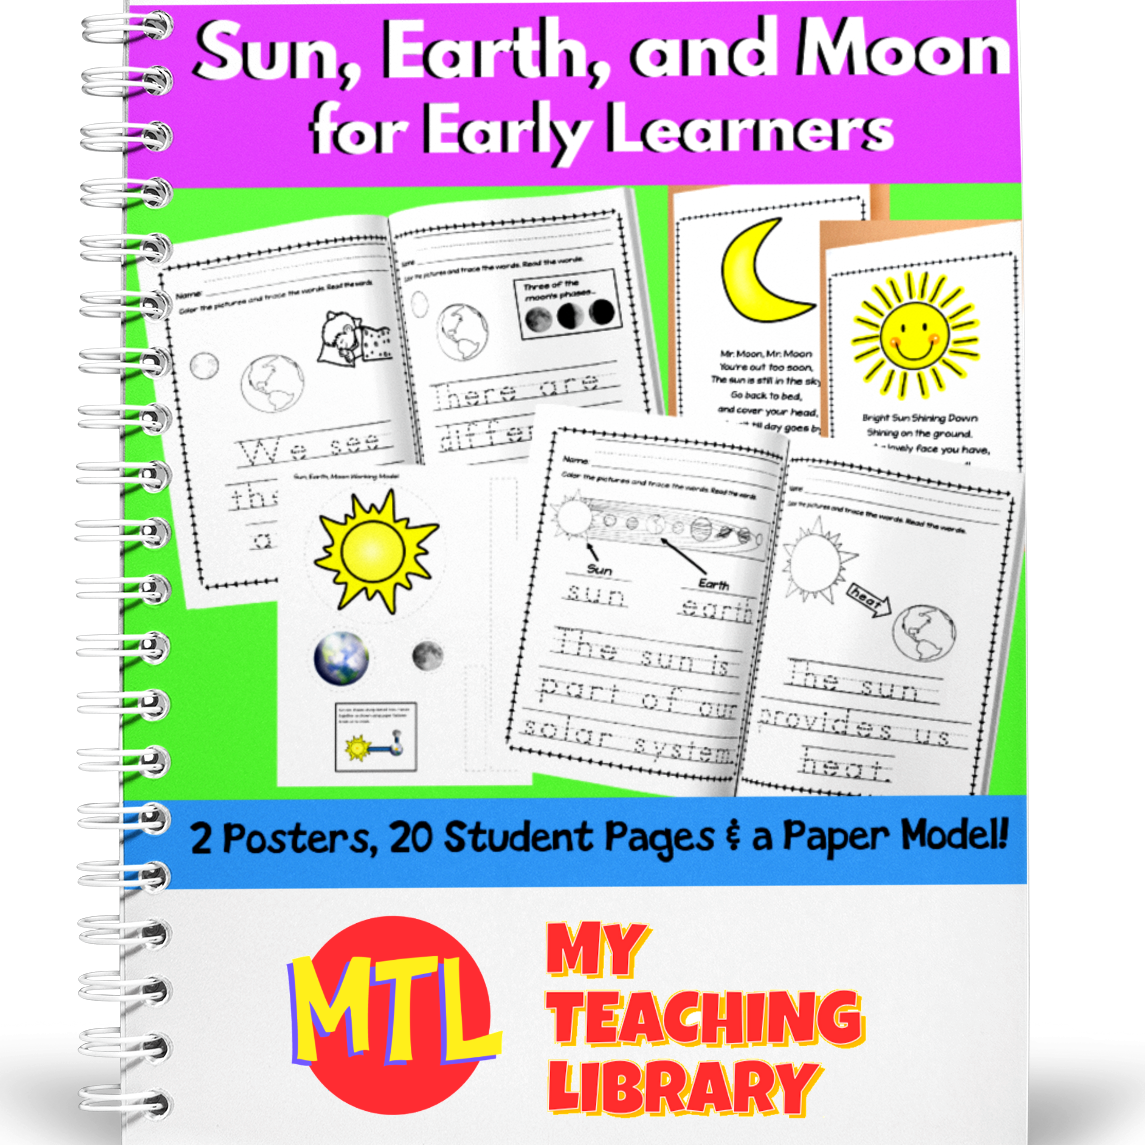 z 305 Sun Earth Moon Early Learning cover